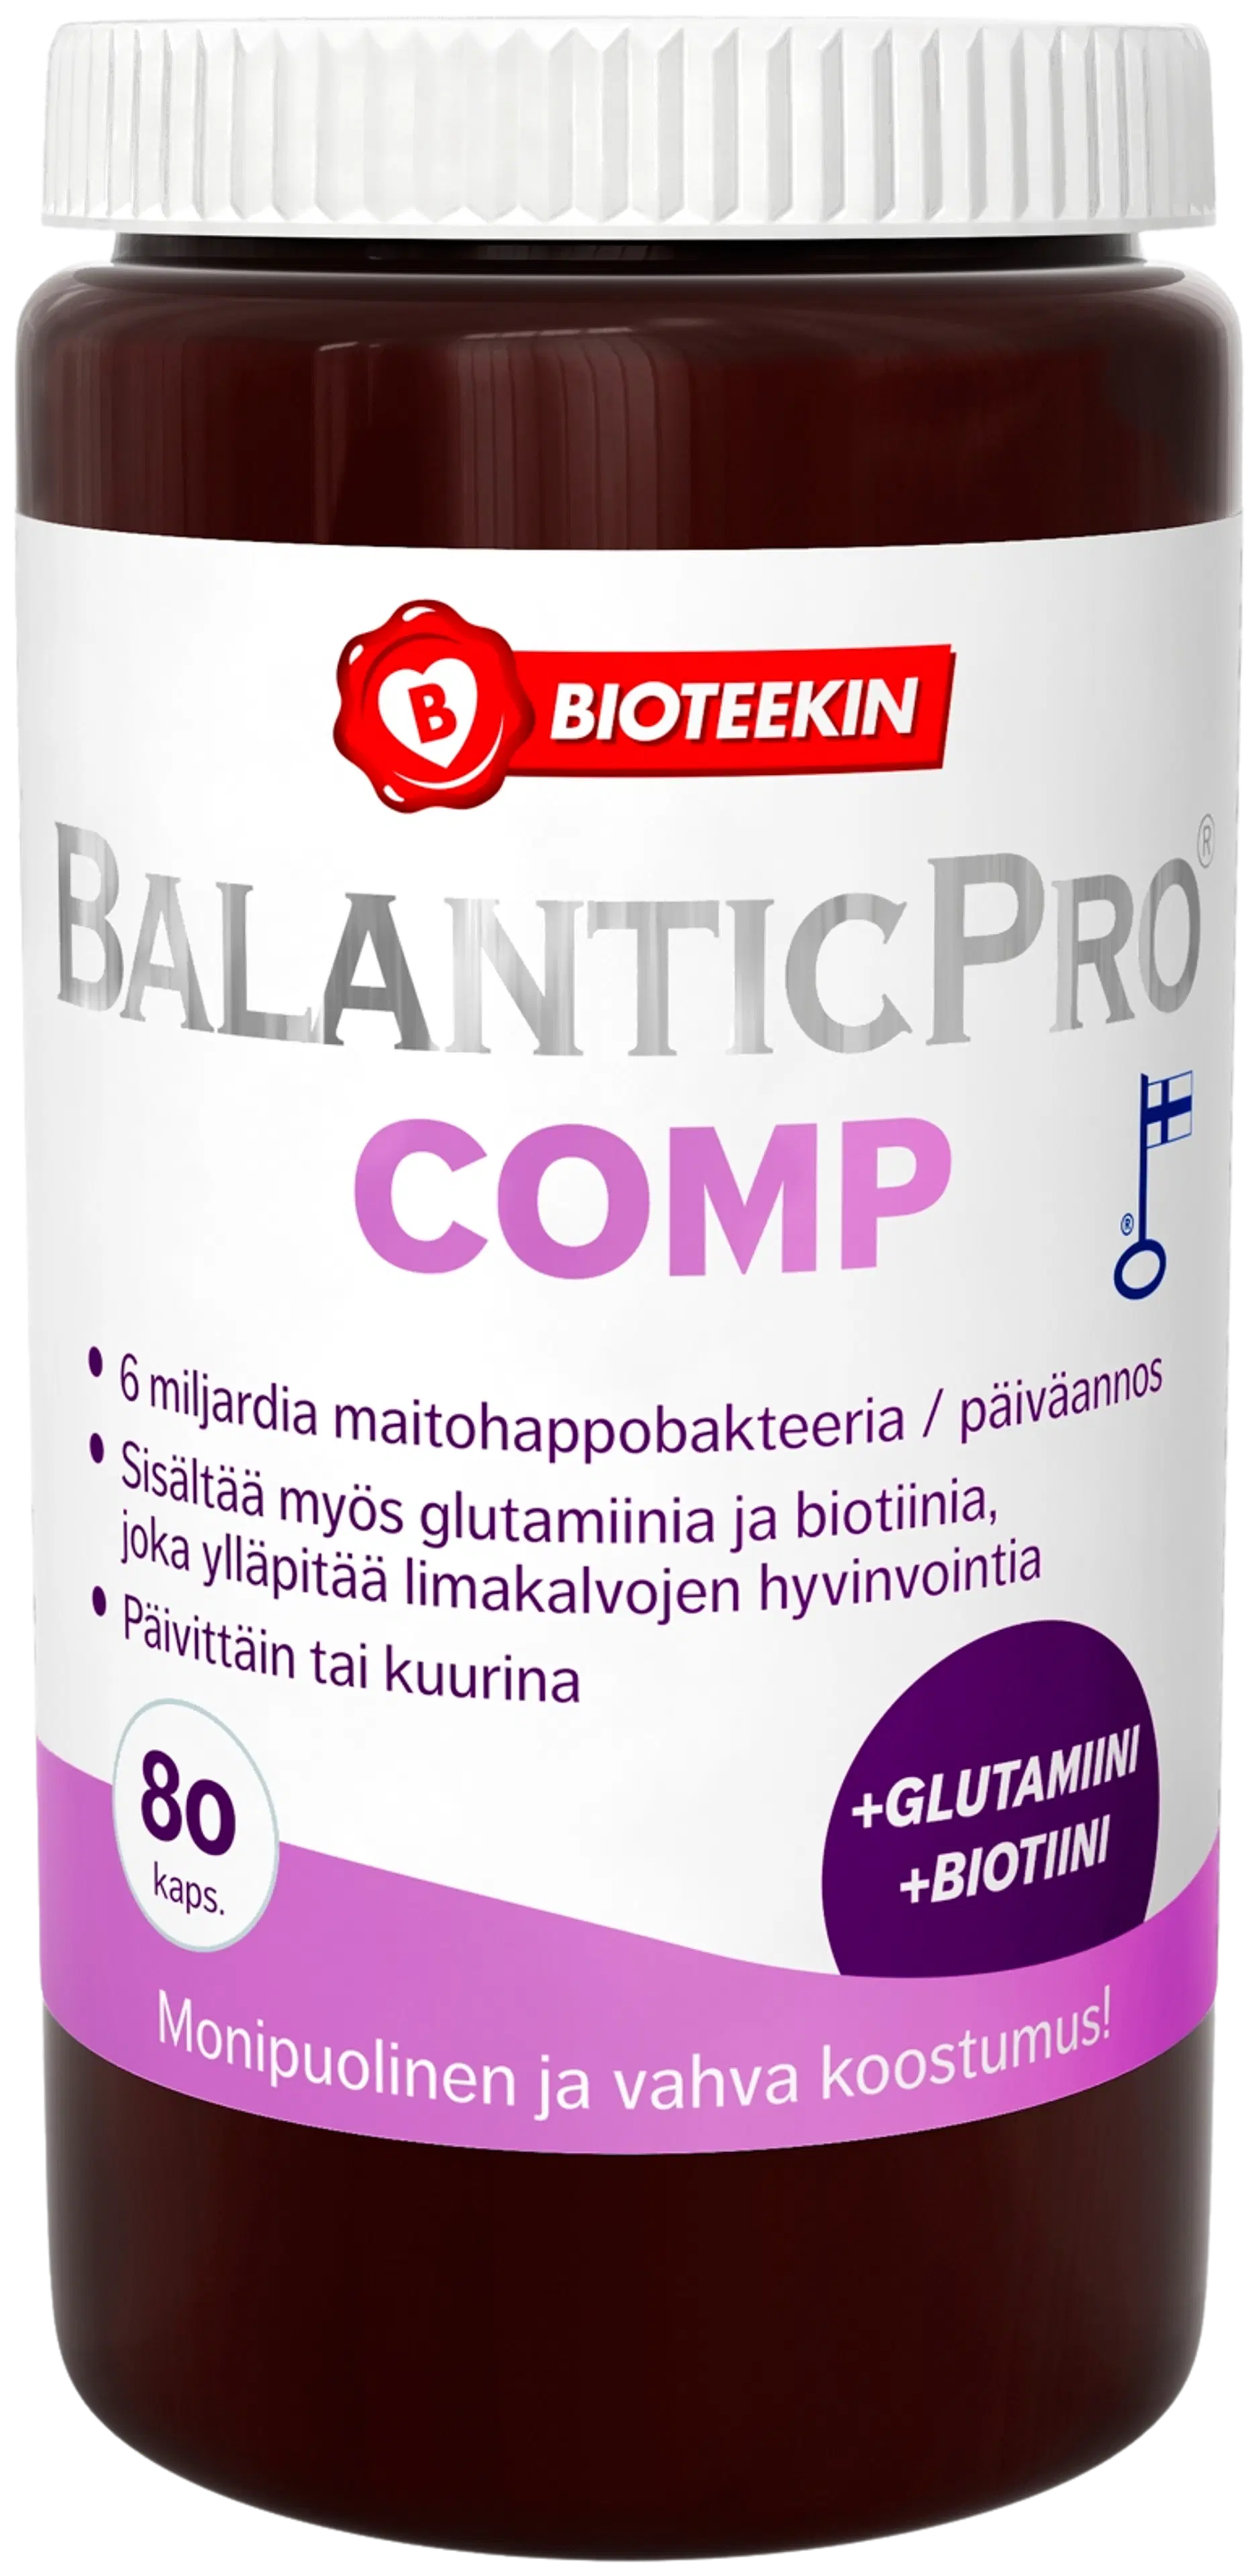 Bioteekki BalanticPro Comp 80 kaps.